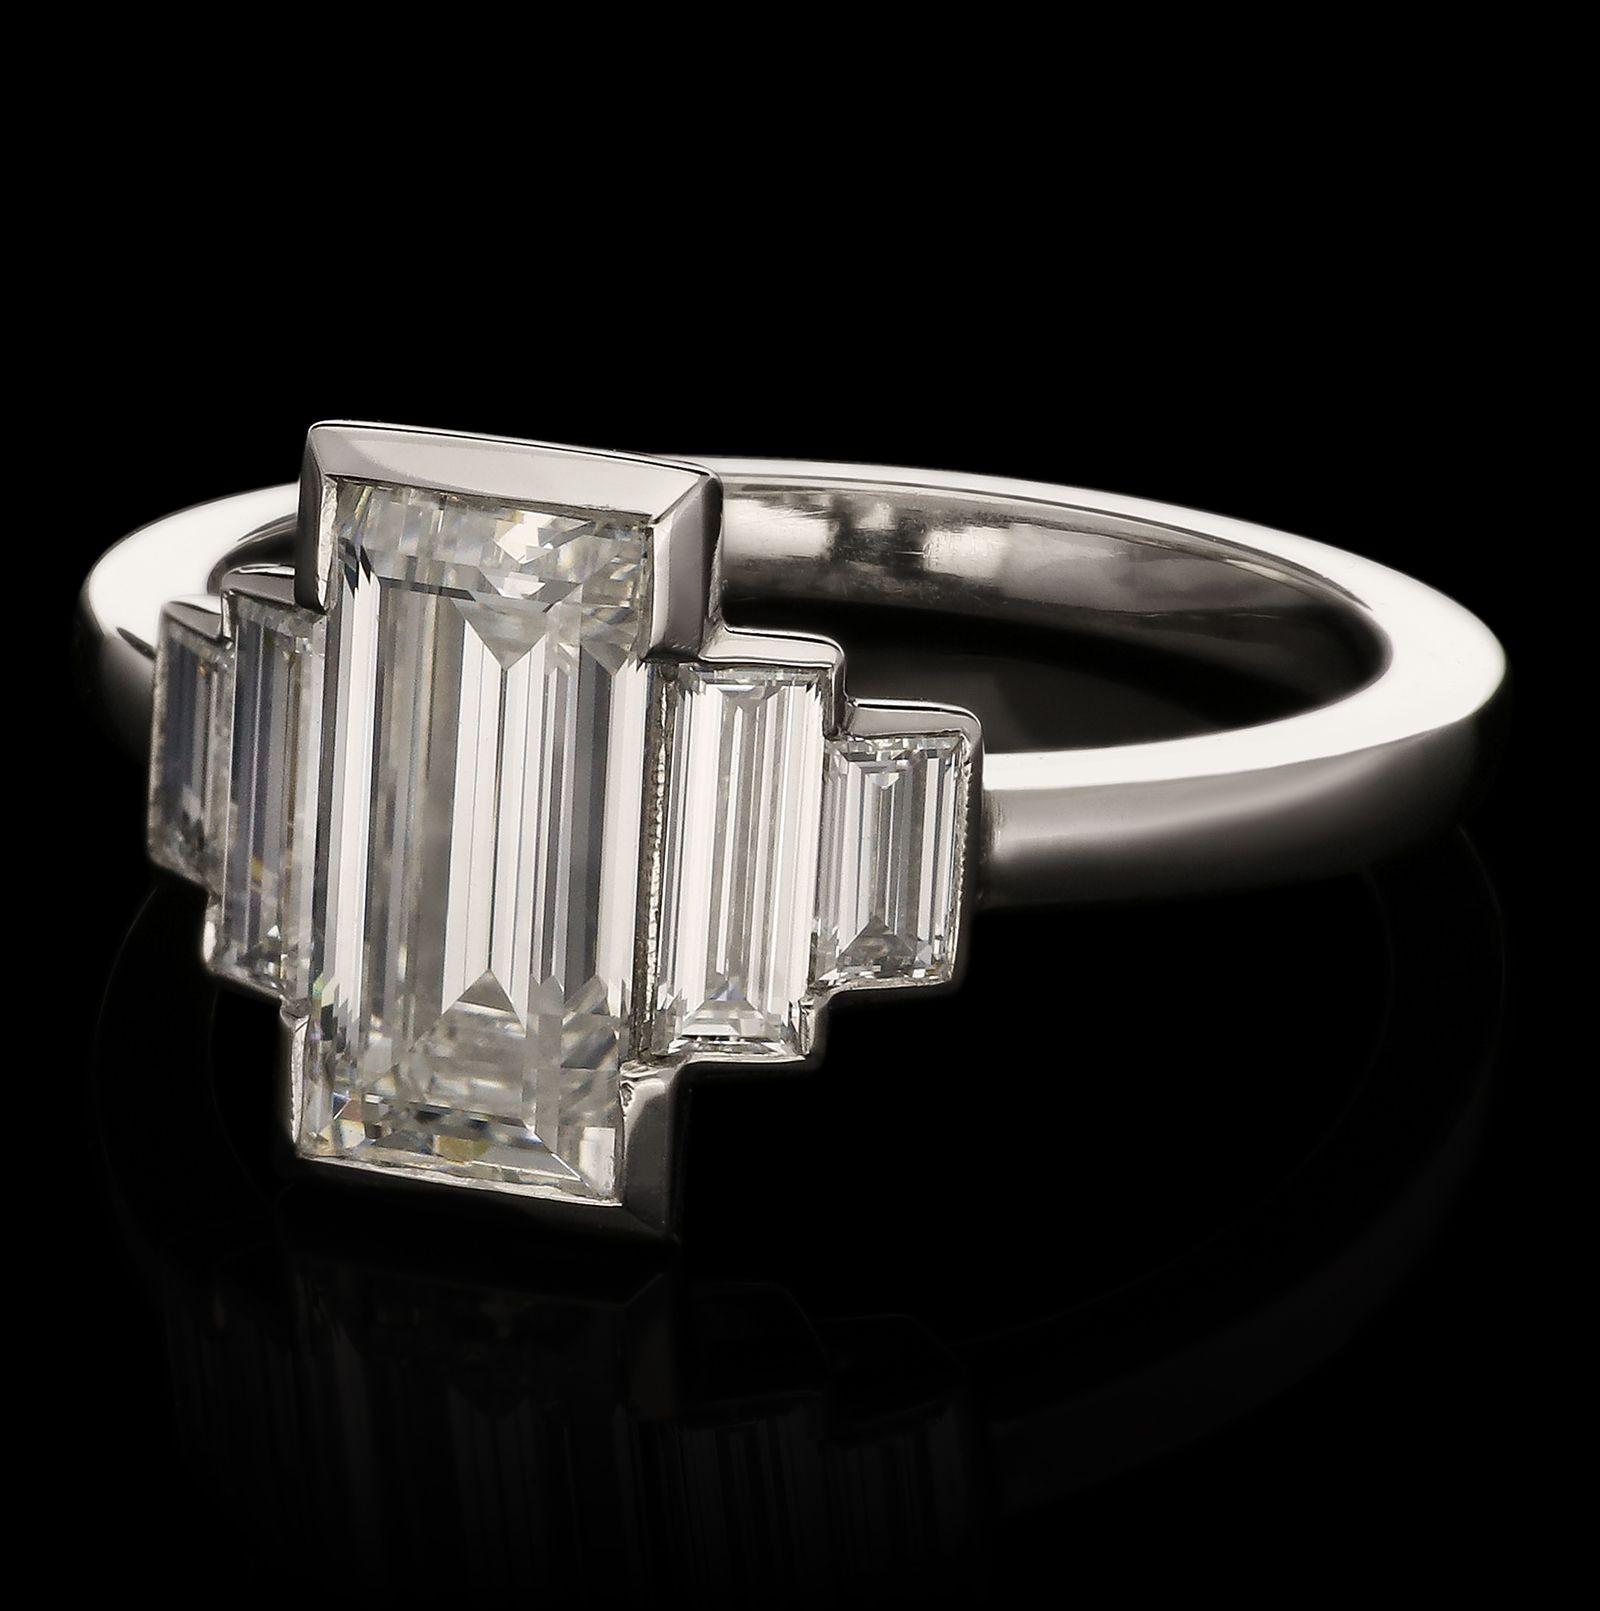 Taille émeraude Hancocks 1.54ct Emerald-Cut Diamond Ring Set in Platinum Contemporary (Bague en platine avec diamant taille émeraude) en vente